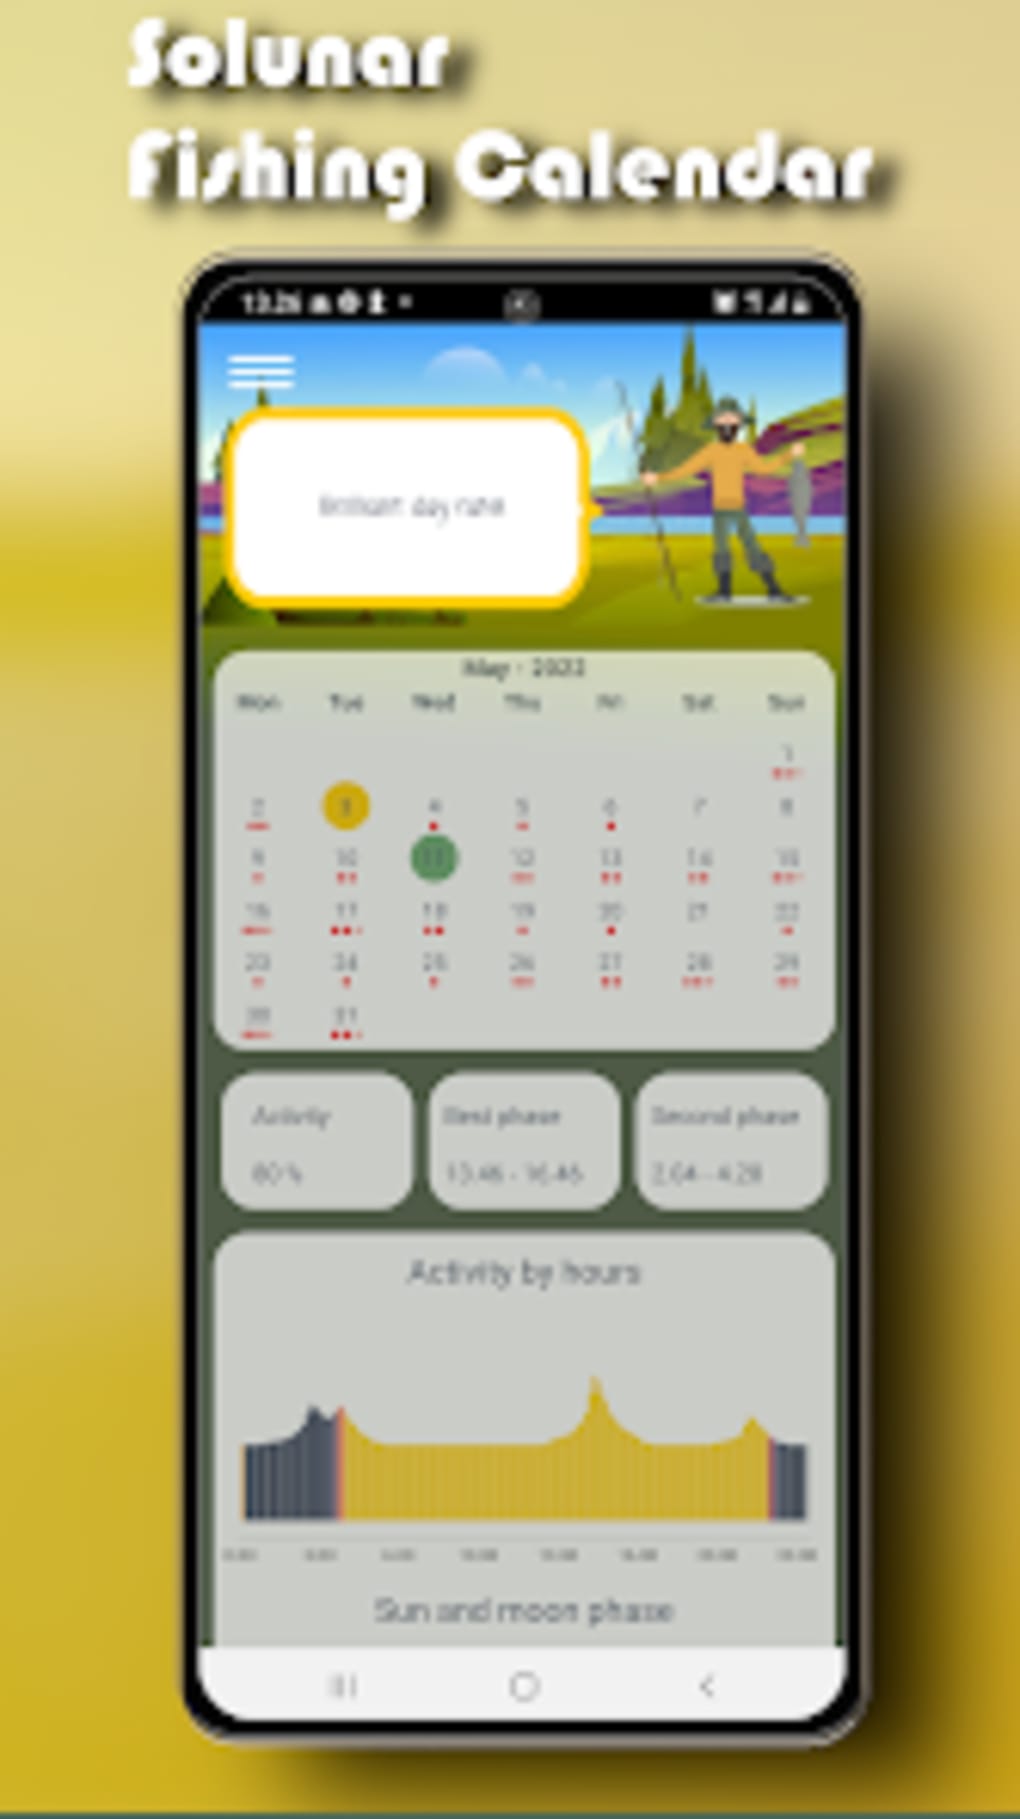 Solunar Fishing Calendar per Android Download